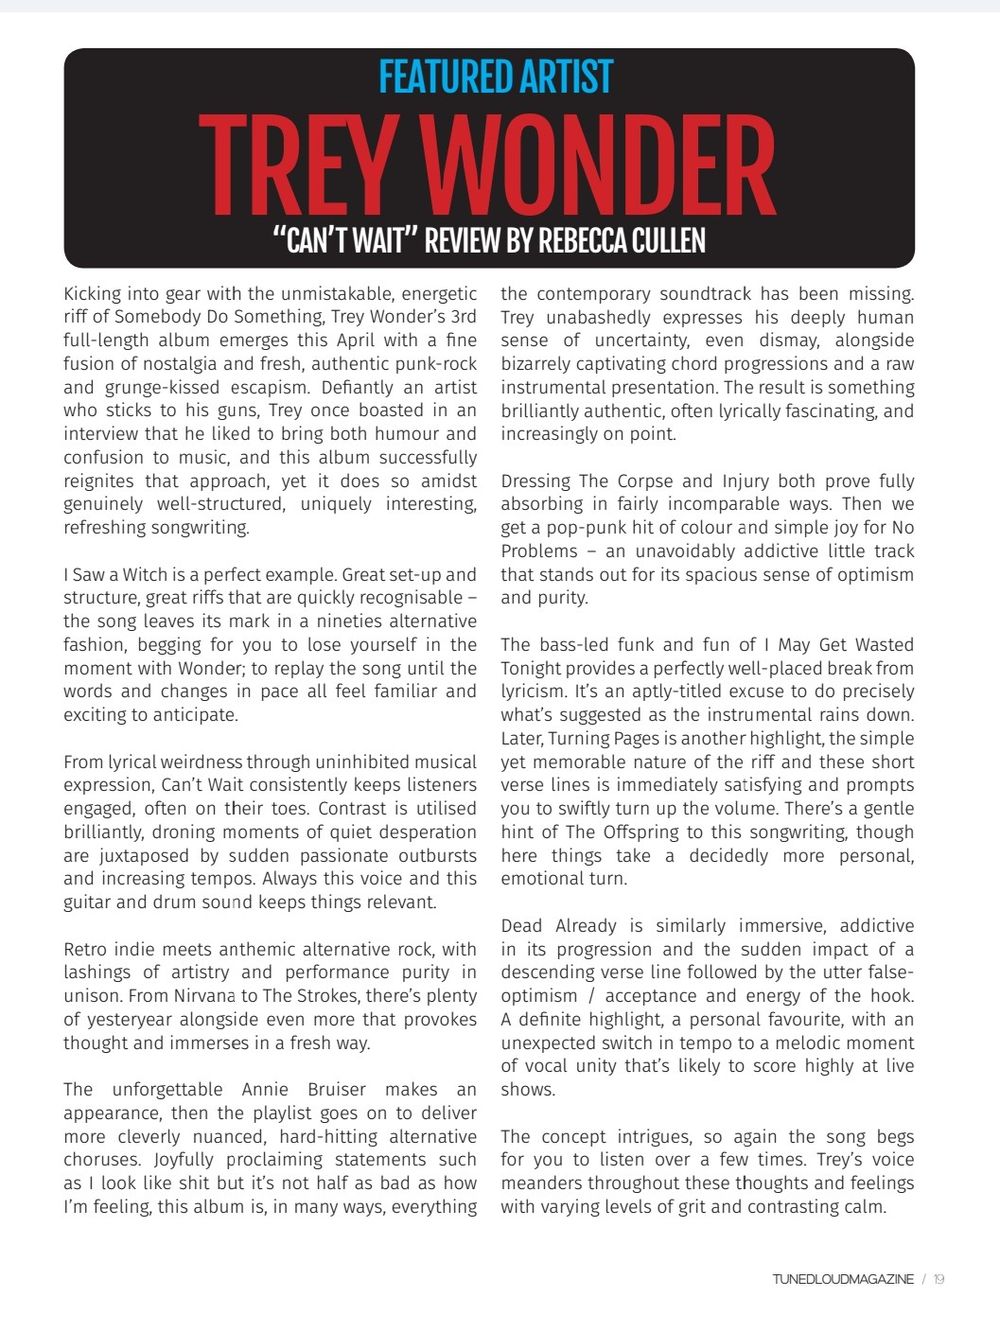 Trey Wonder in tunedloud magazine